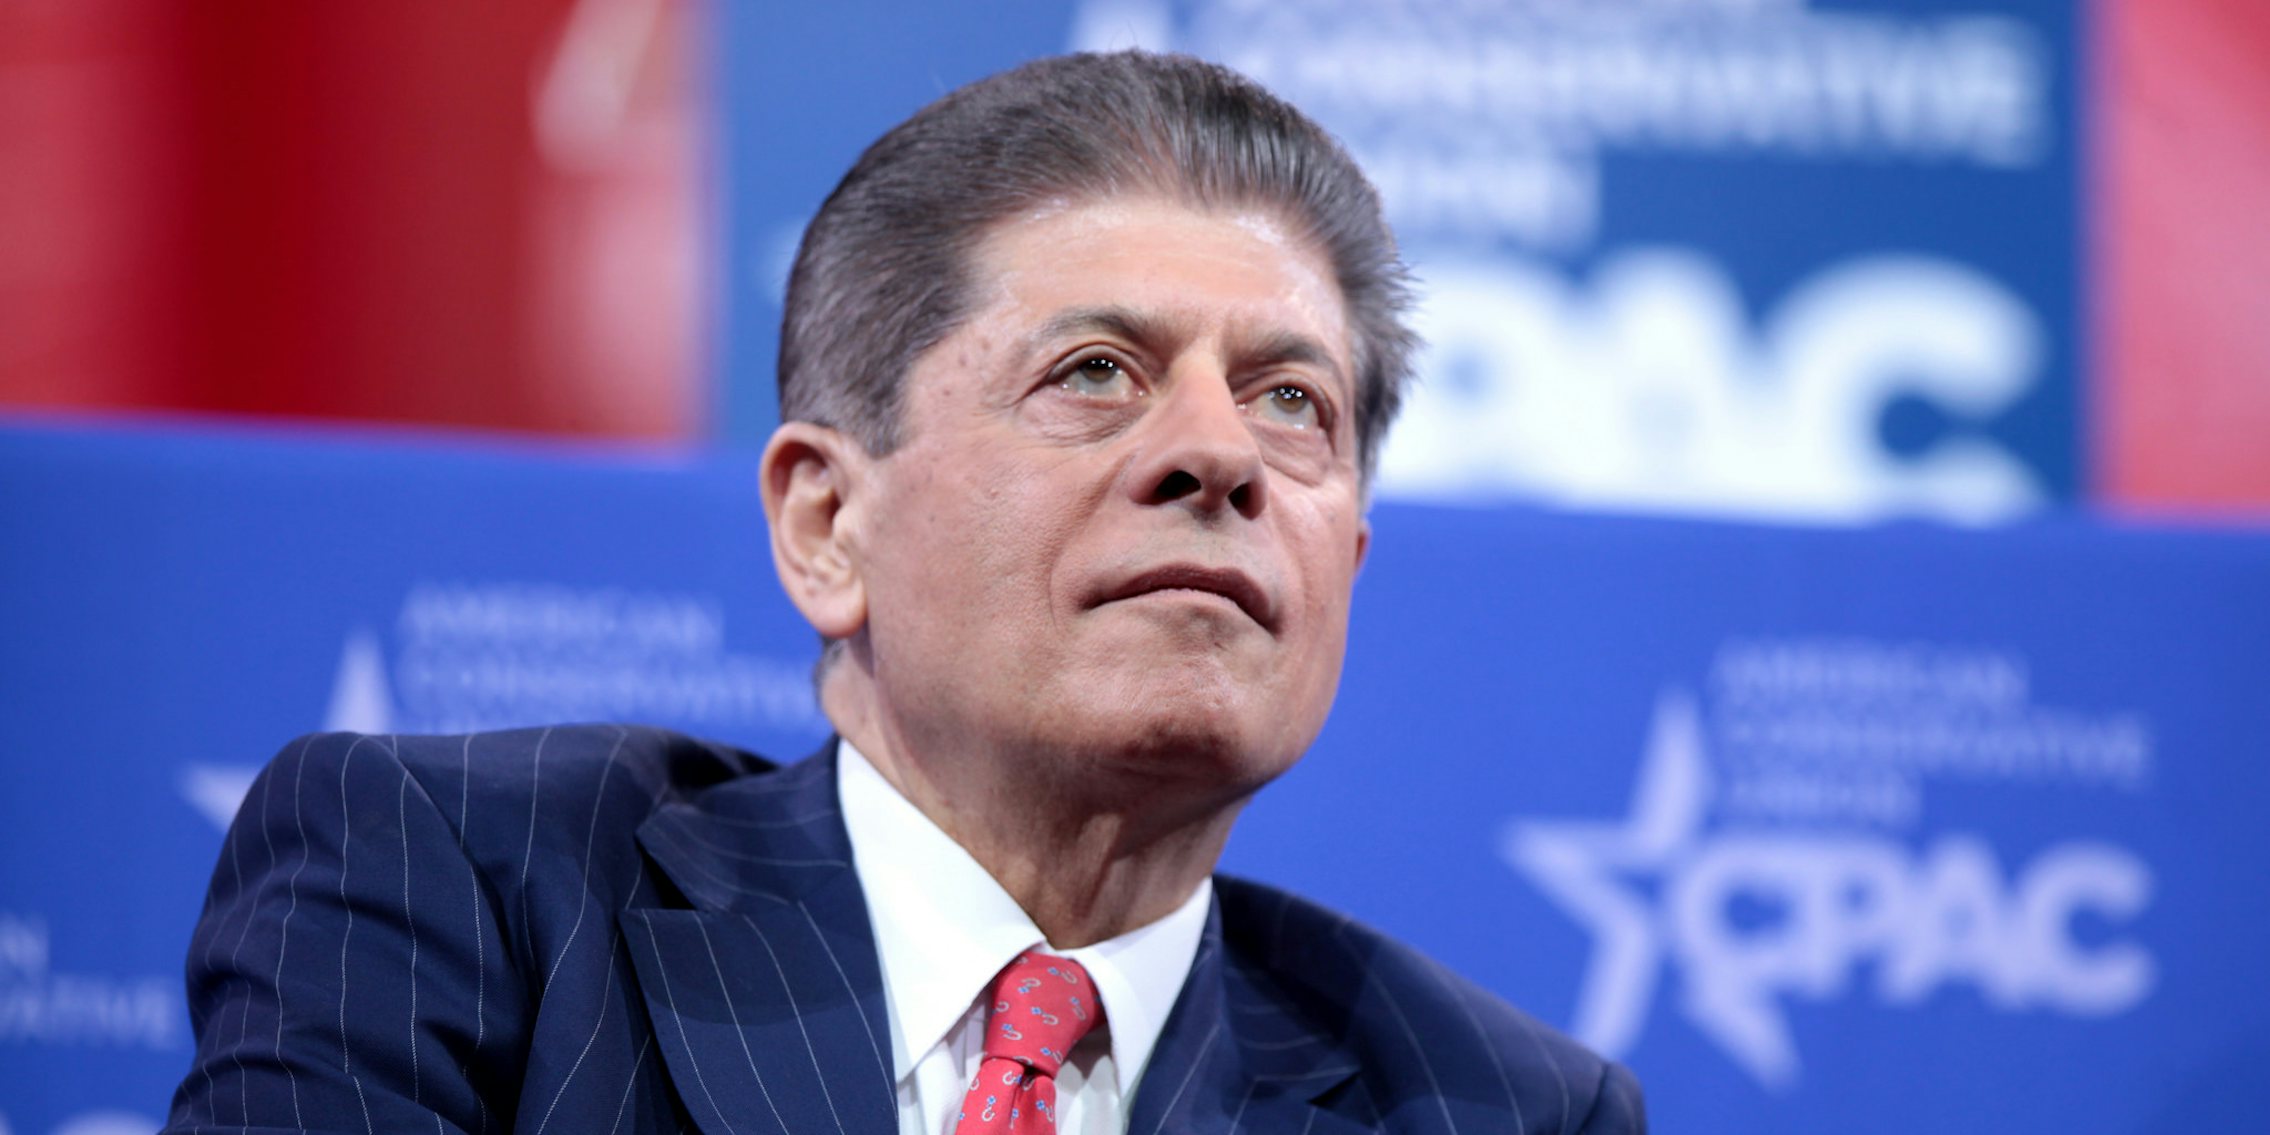 Fox News suspends Judge Andrew Napolitano